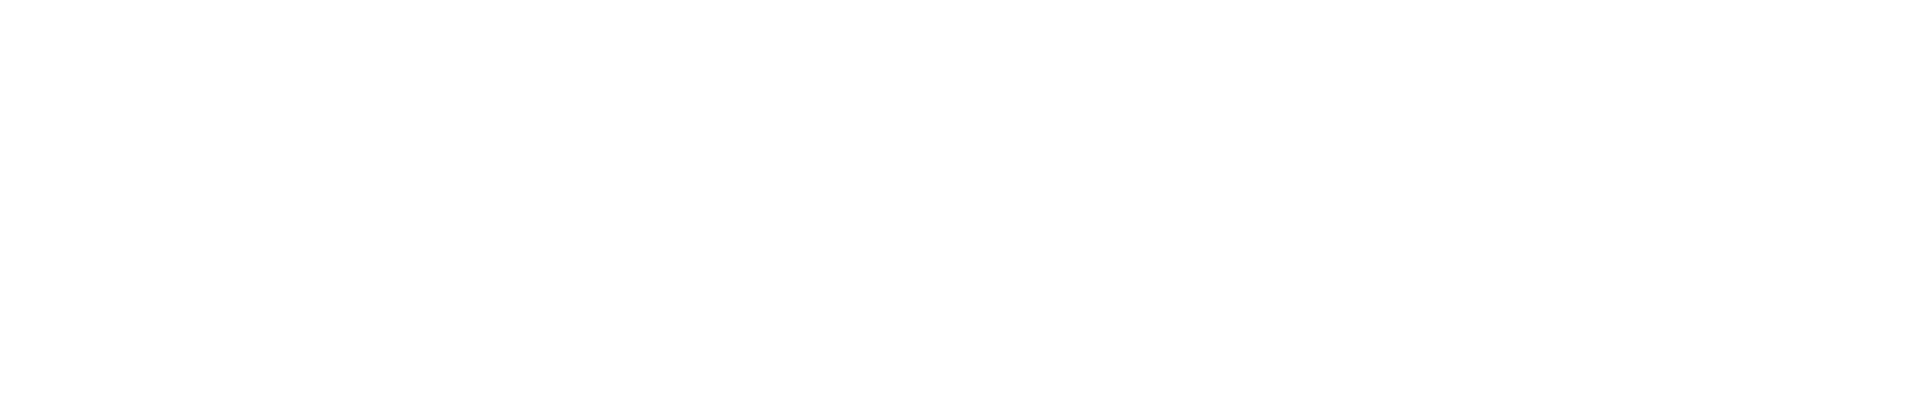 Harrison Healthcare